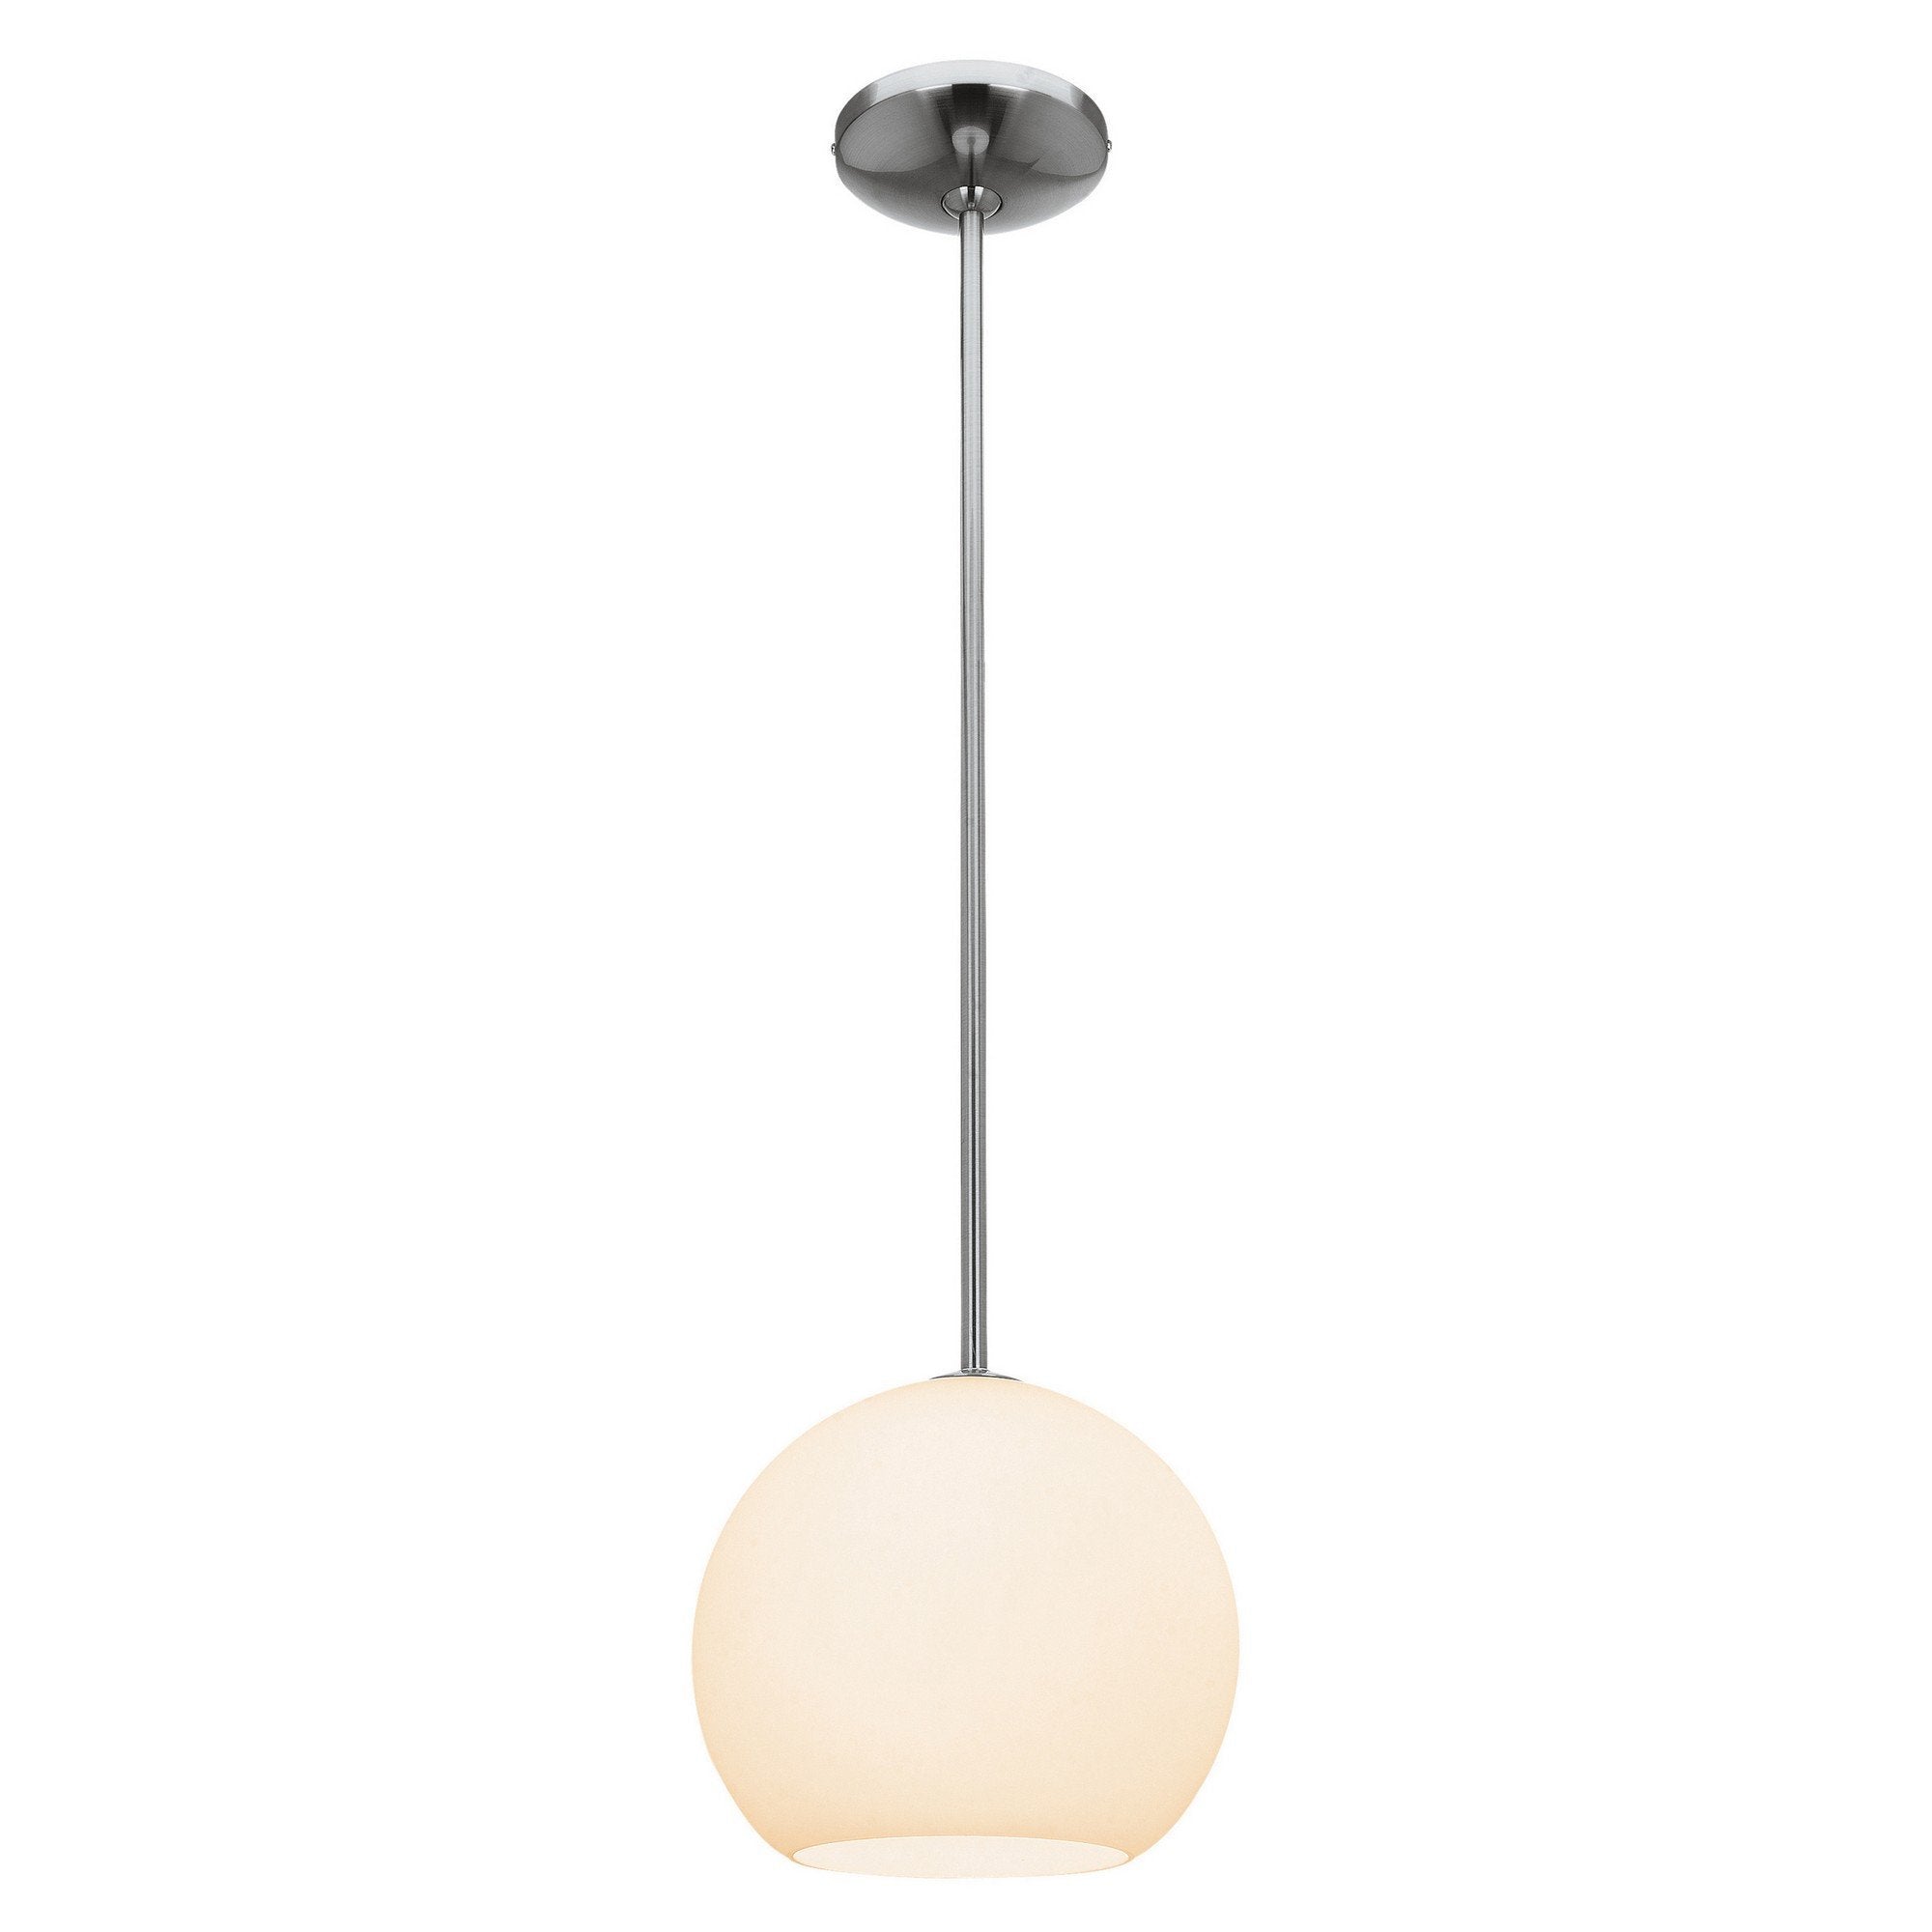 Nitrogen Ball Pendant (s) - Brushed Steel (BS) Ceiling Access Lighting 